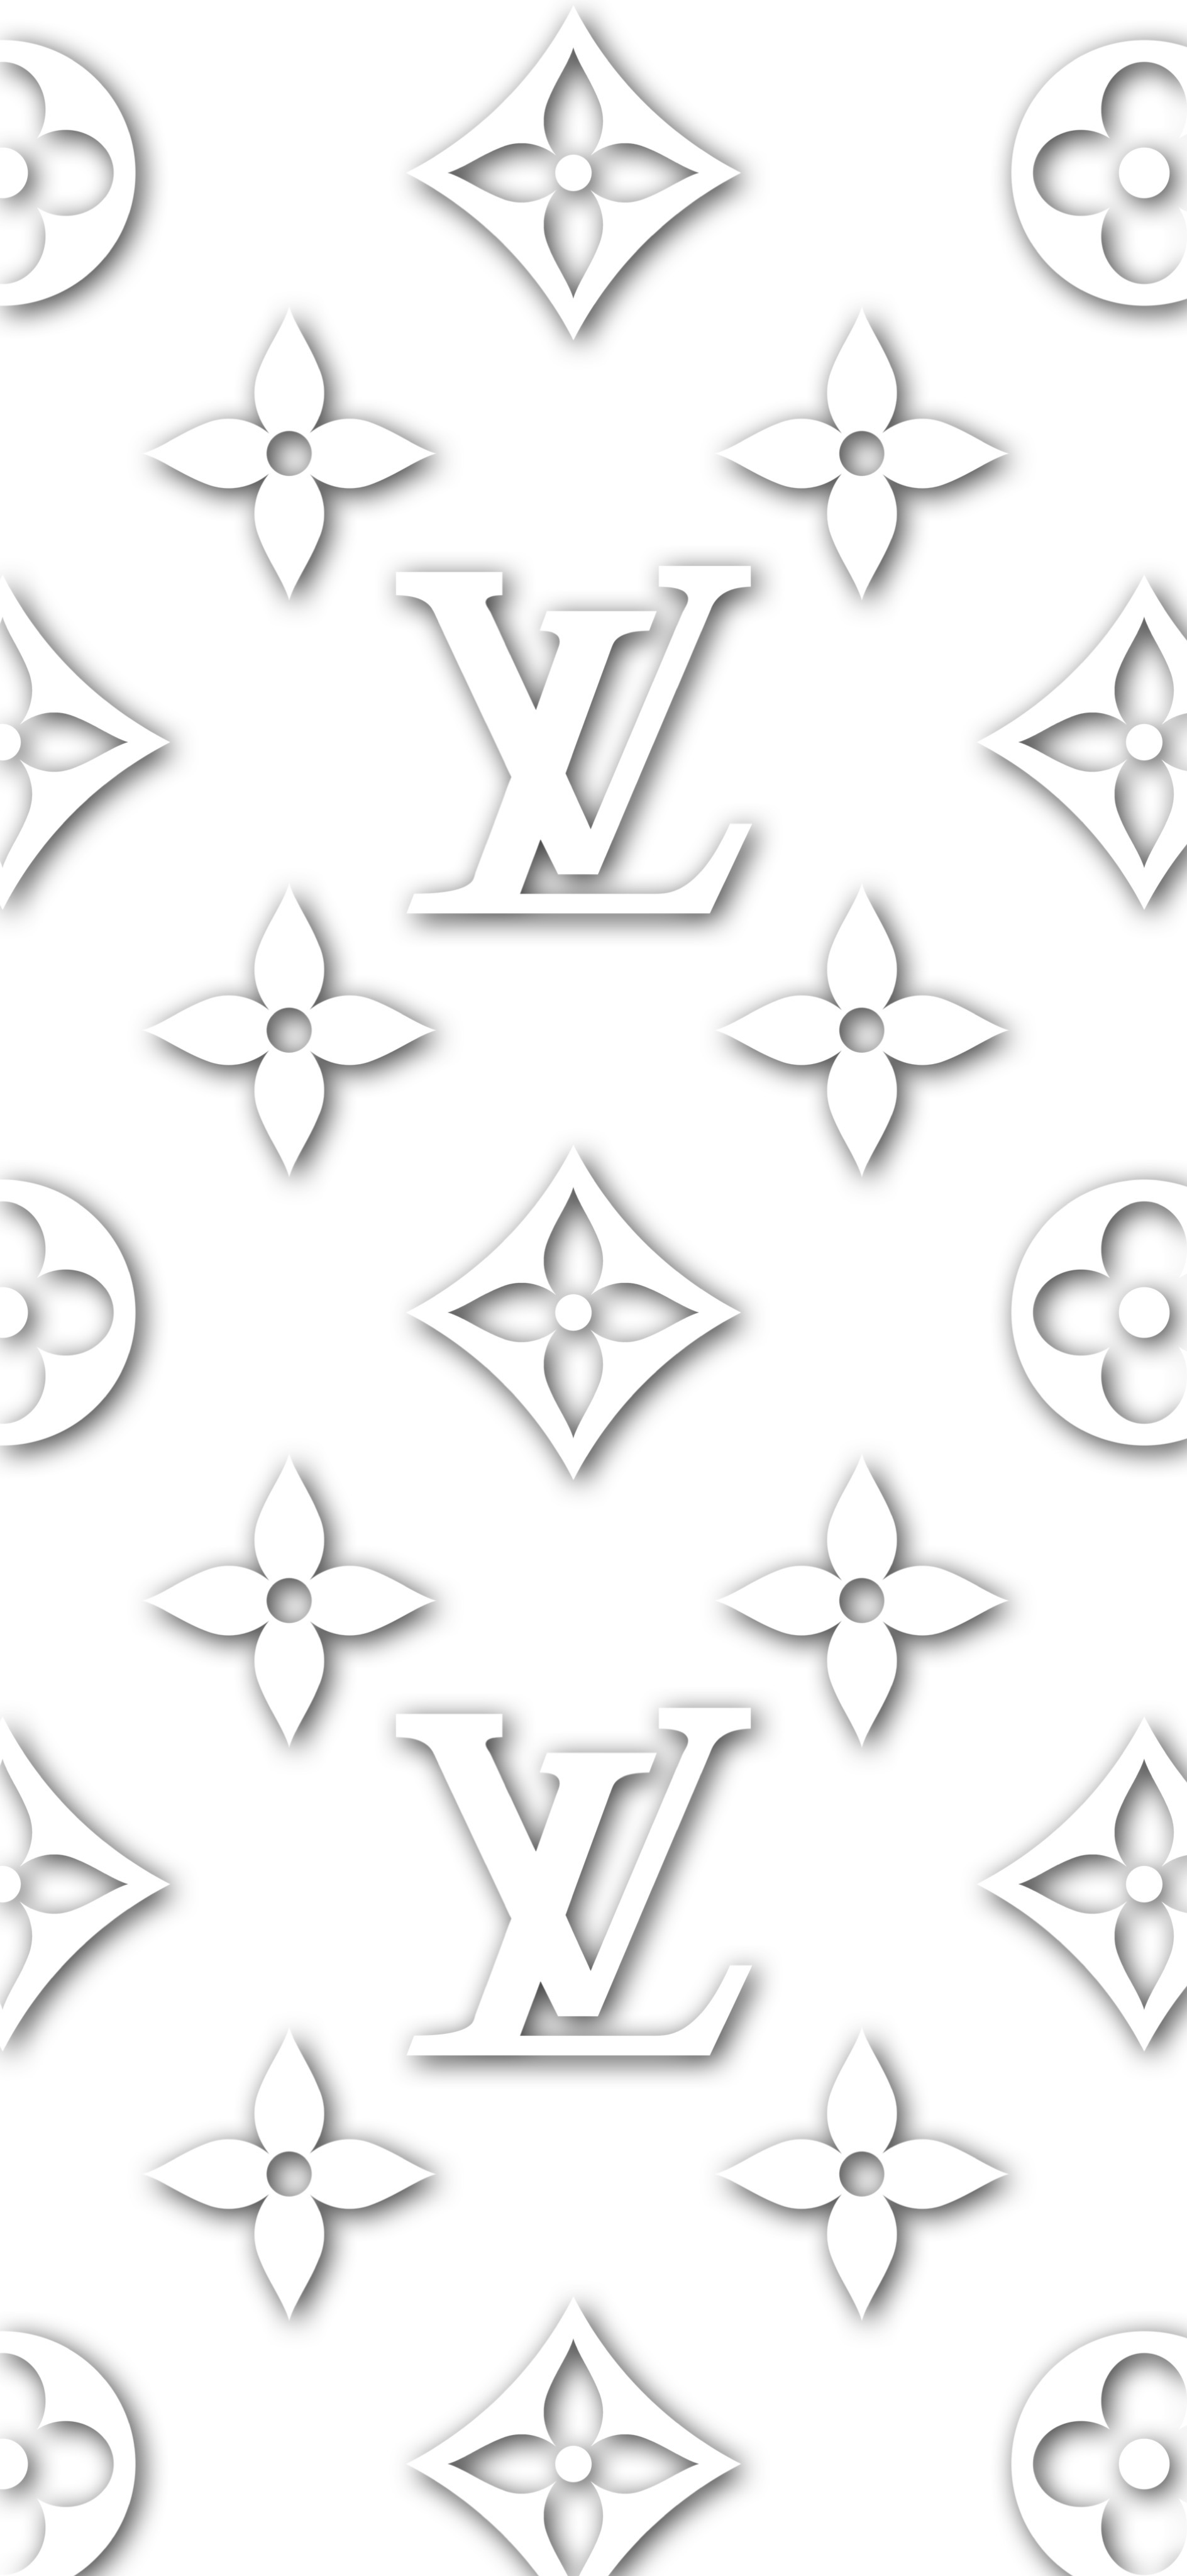 Louis Vuitton Wallpaper by TeVesMuyNerviosa on DeviantArt